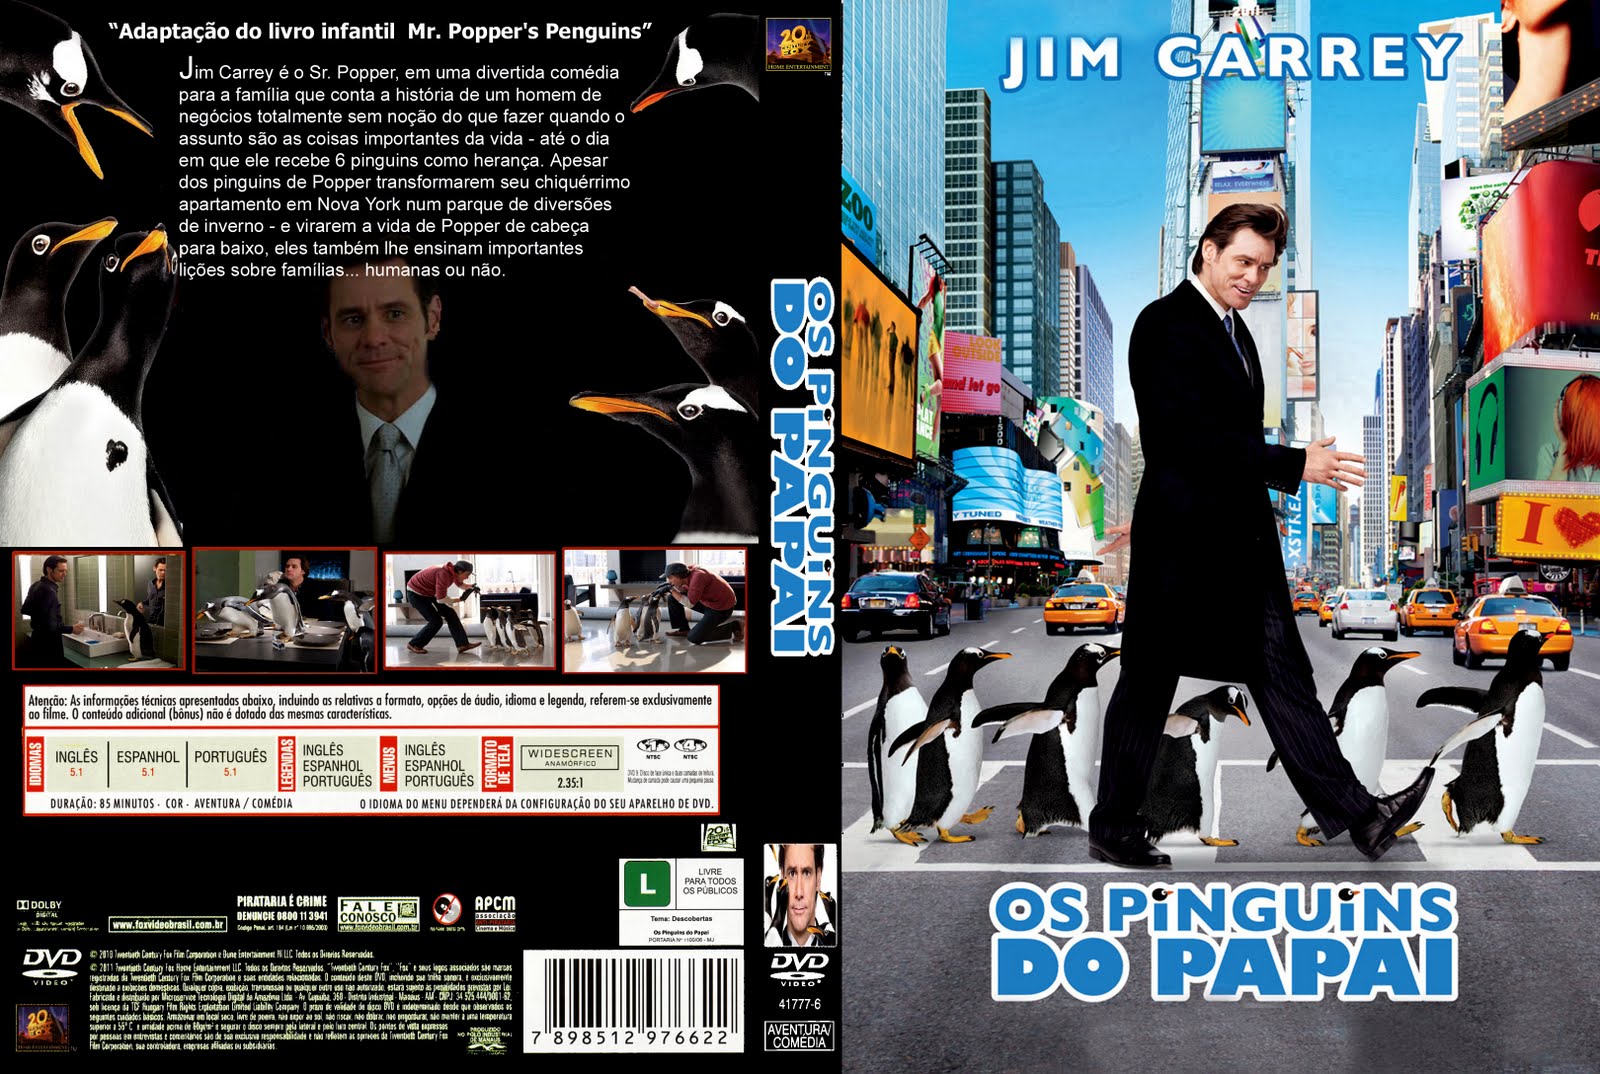 http://4.bp.blogspot.com/-J7RXO6uEvVA/TqN_a44GJMI/AAAAAAAAAVc/6Ahv-R-NvDw/s1600/Os+Pinguins+Do+Papai.jpg